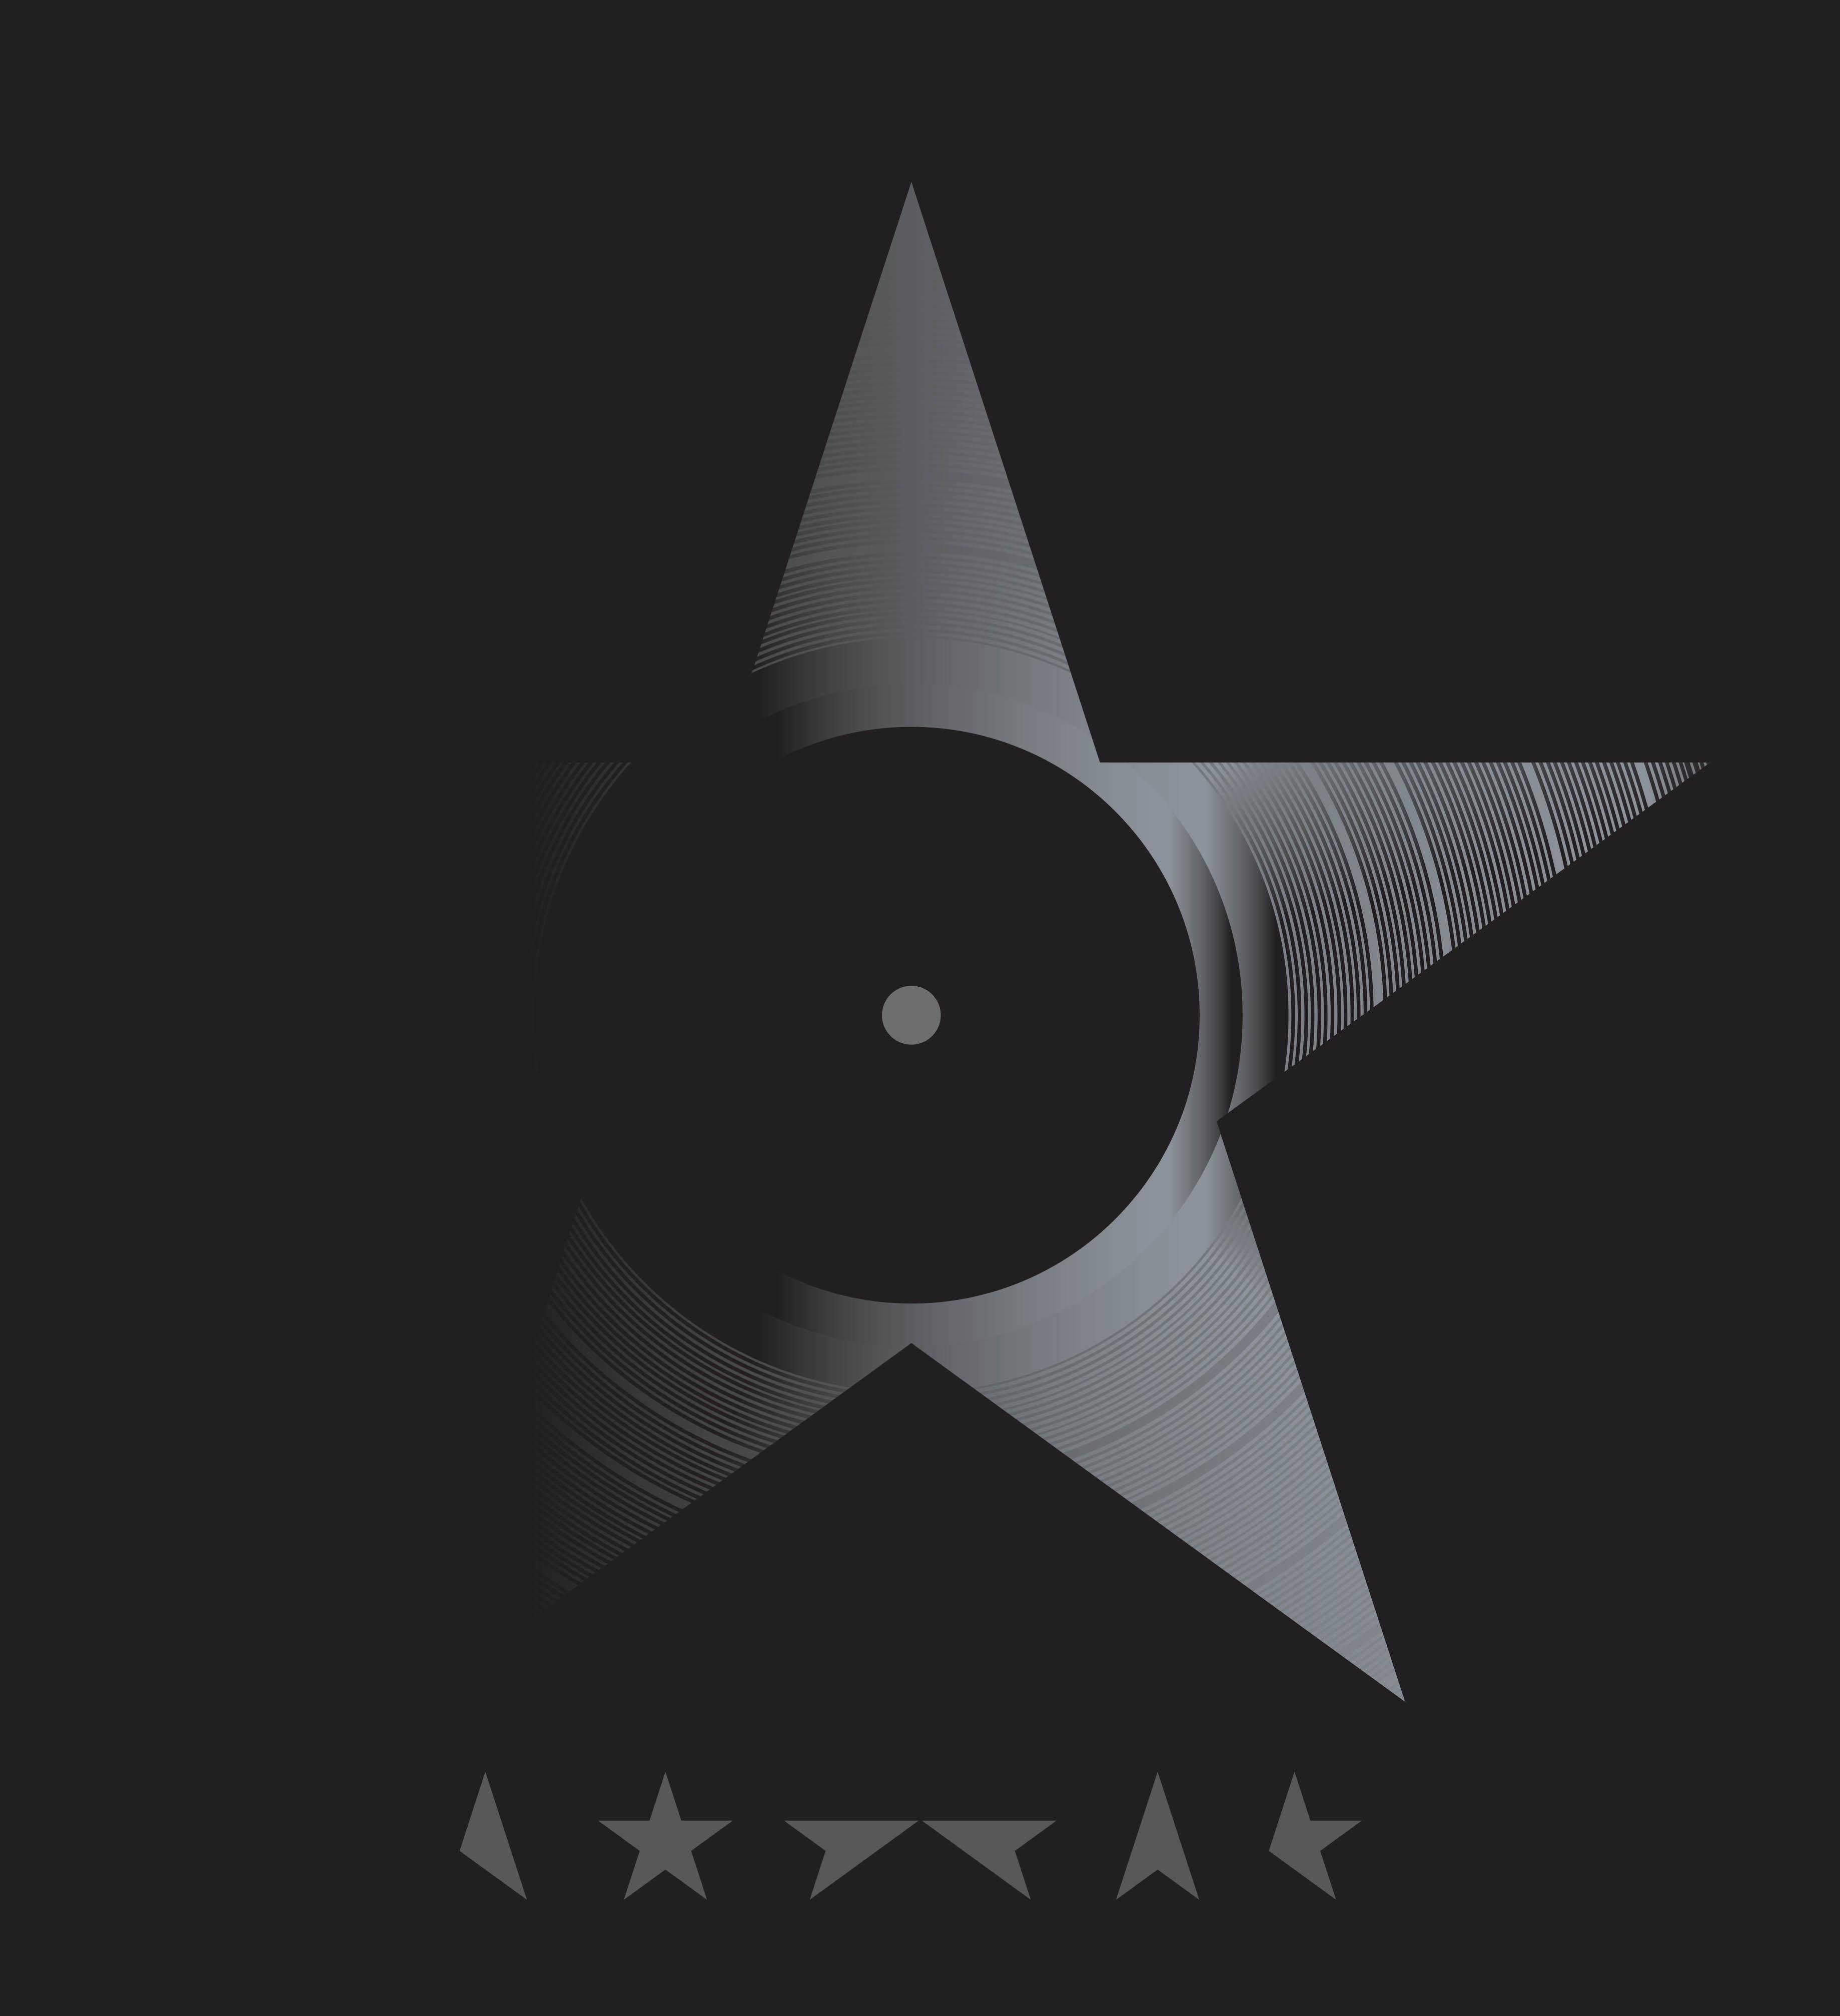 David Bowie - Blackstar (2016) LP